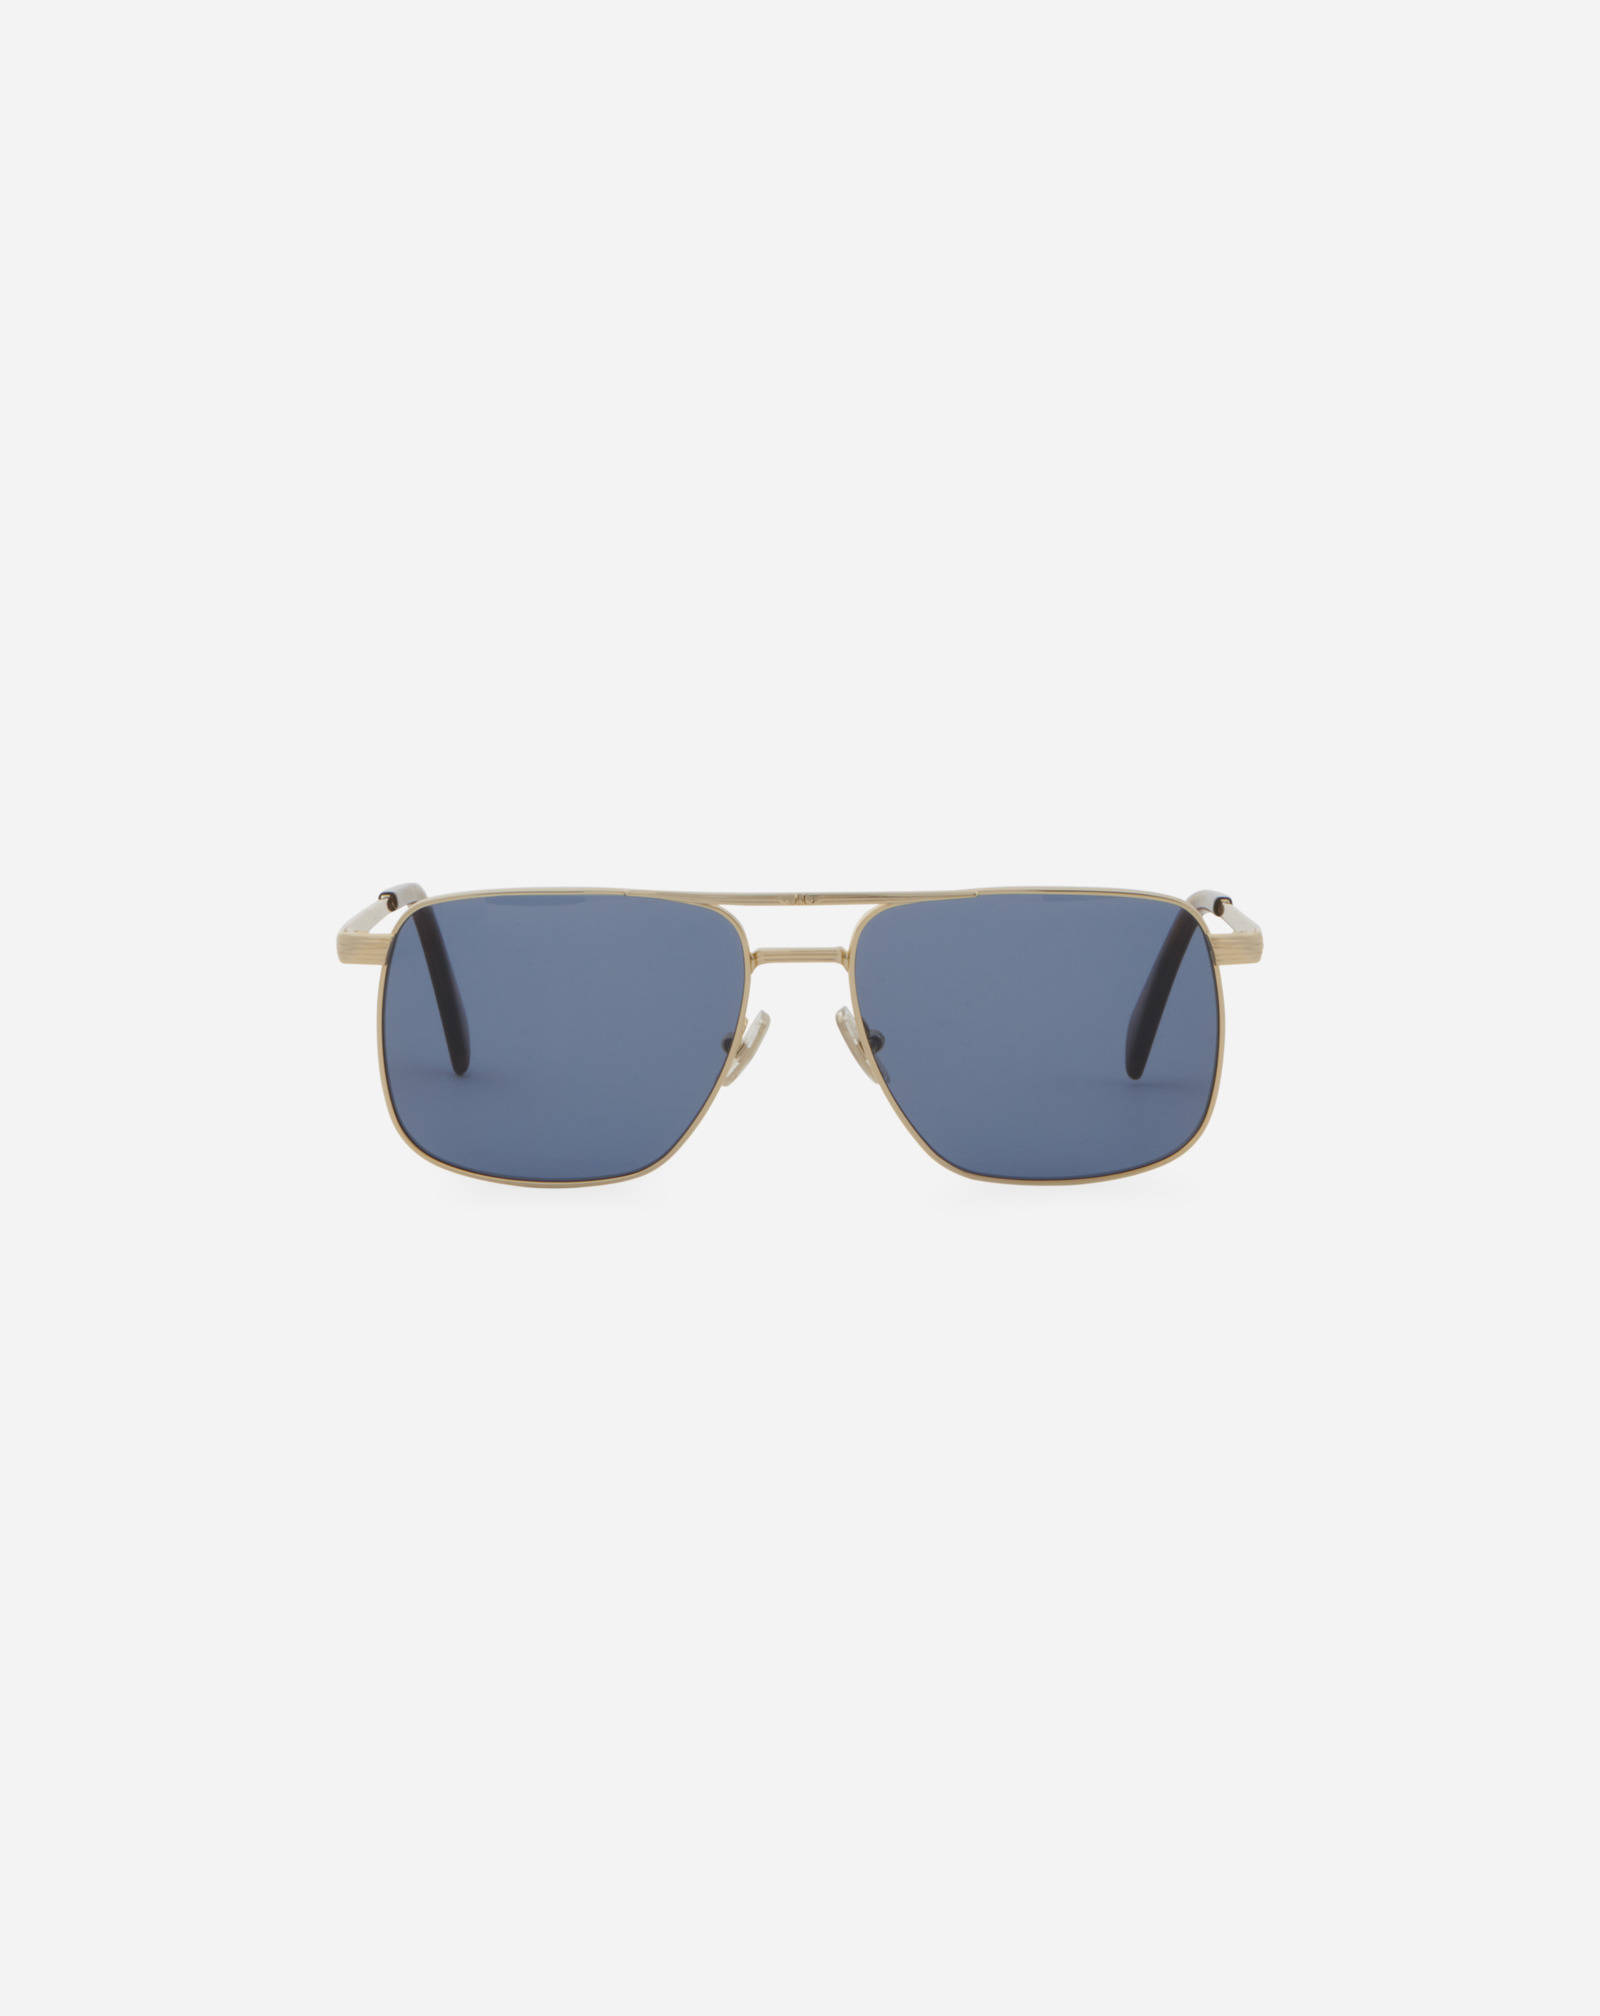 Lanvin Jl Navigator Sunglasses For Women In Blue